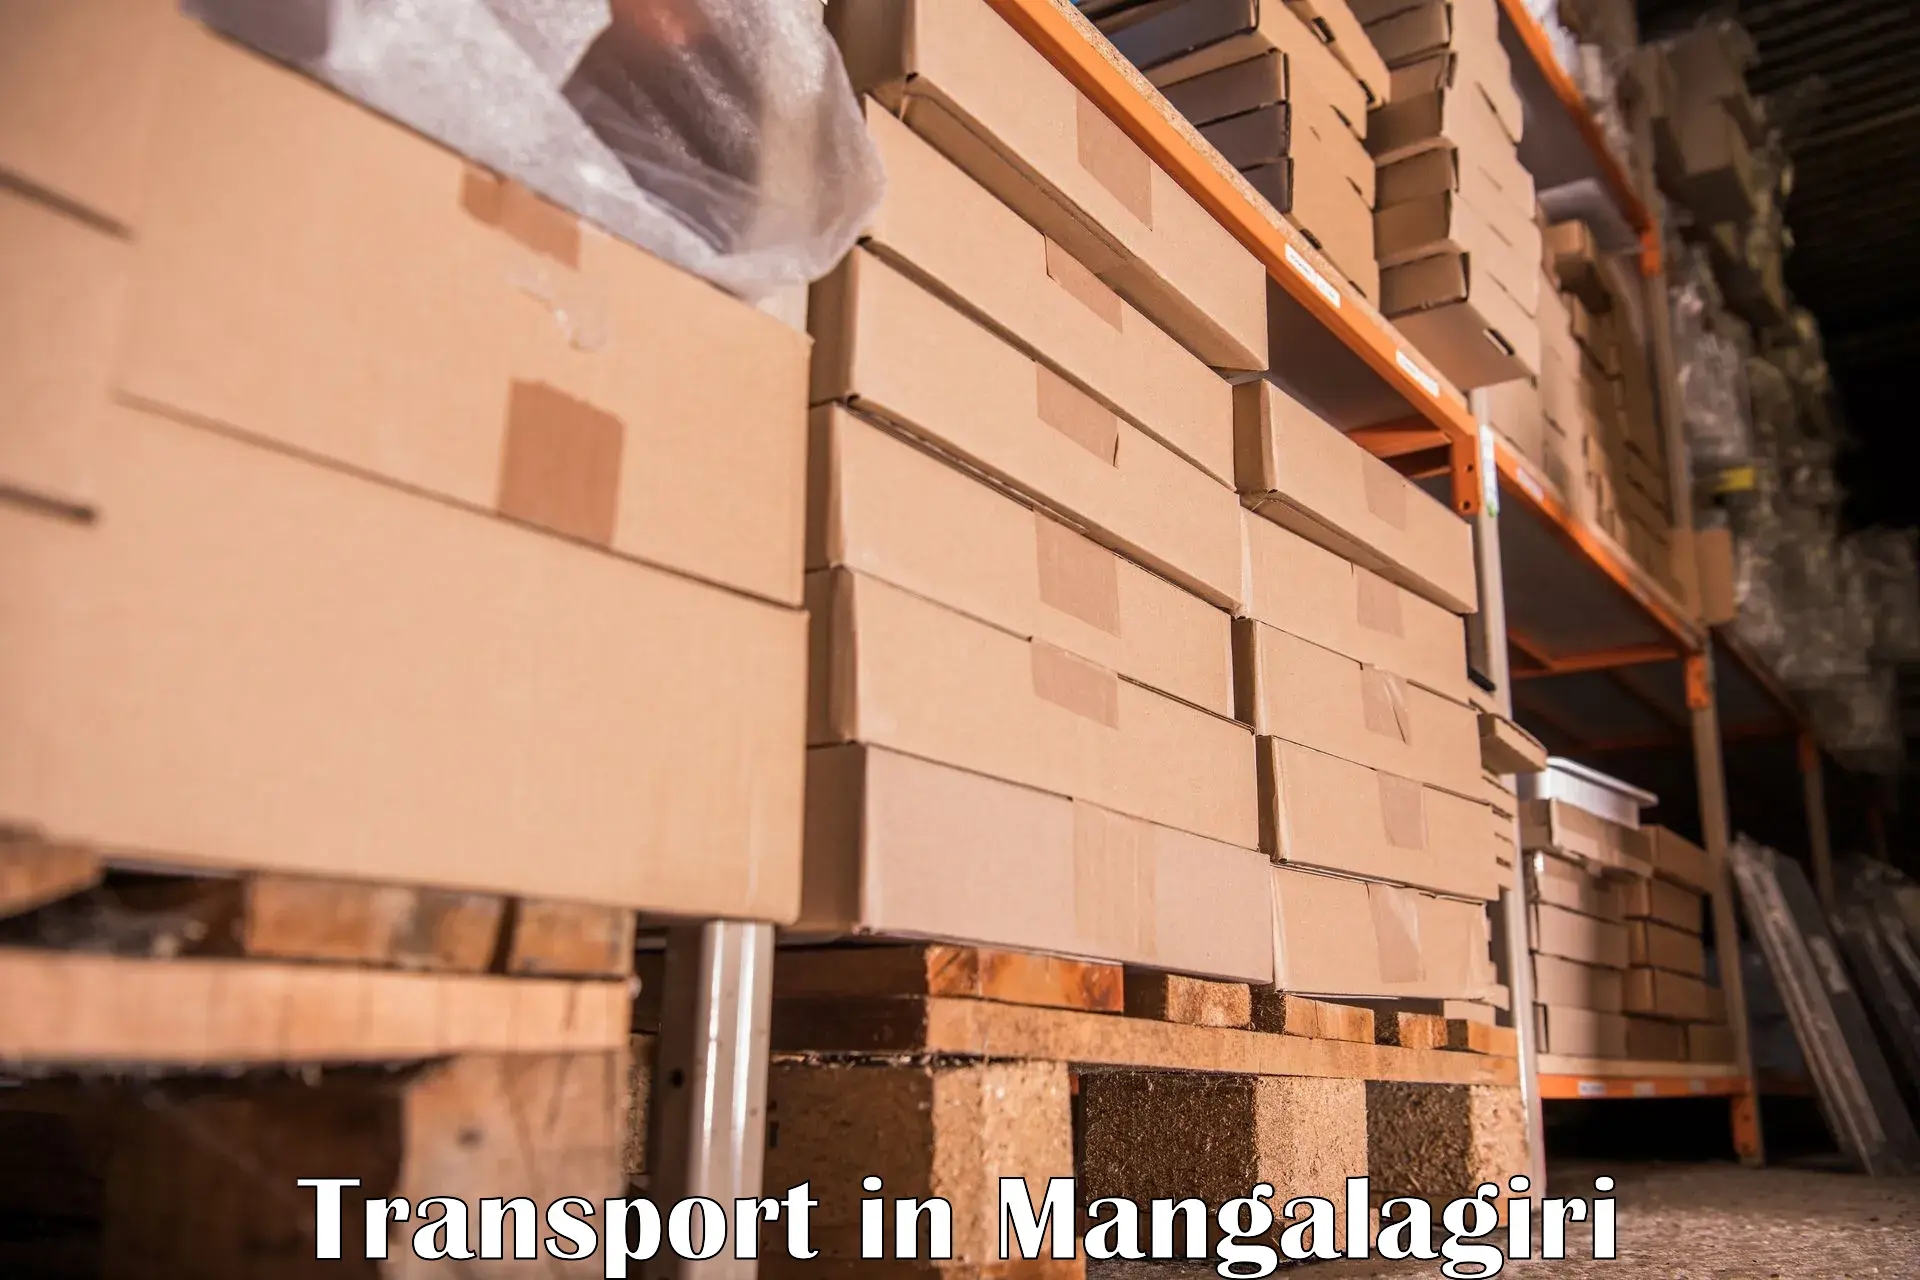 Container transport service in Mangalagiri